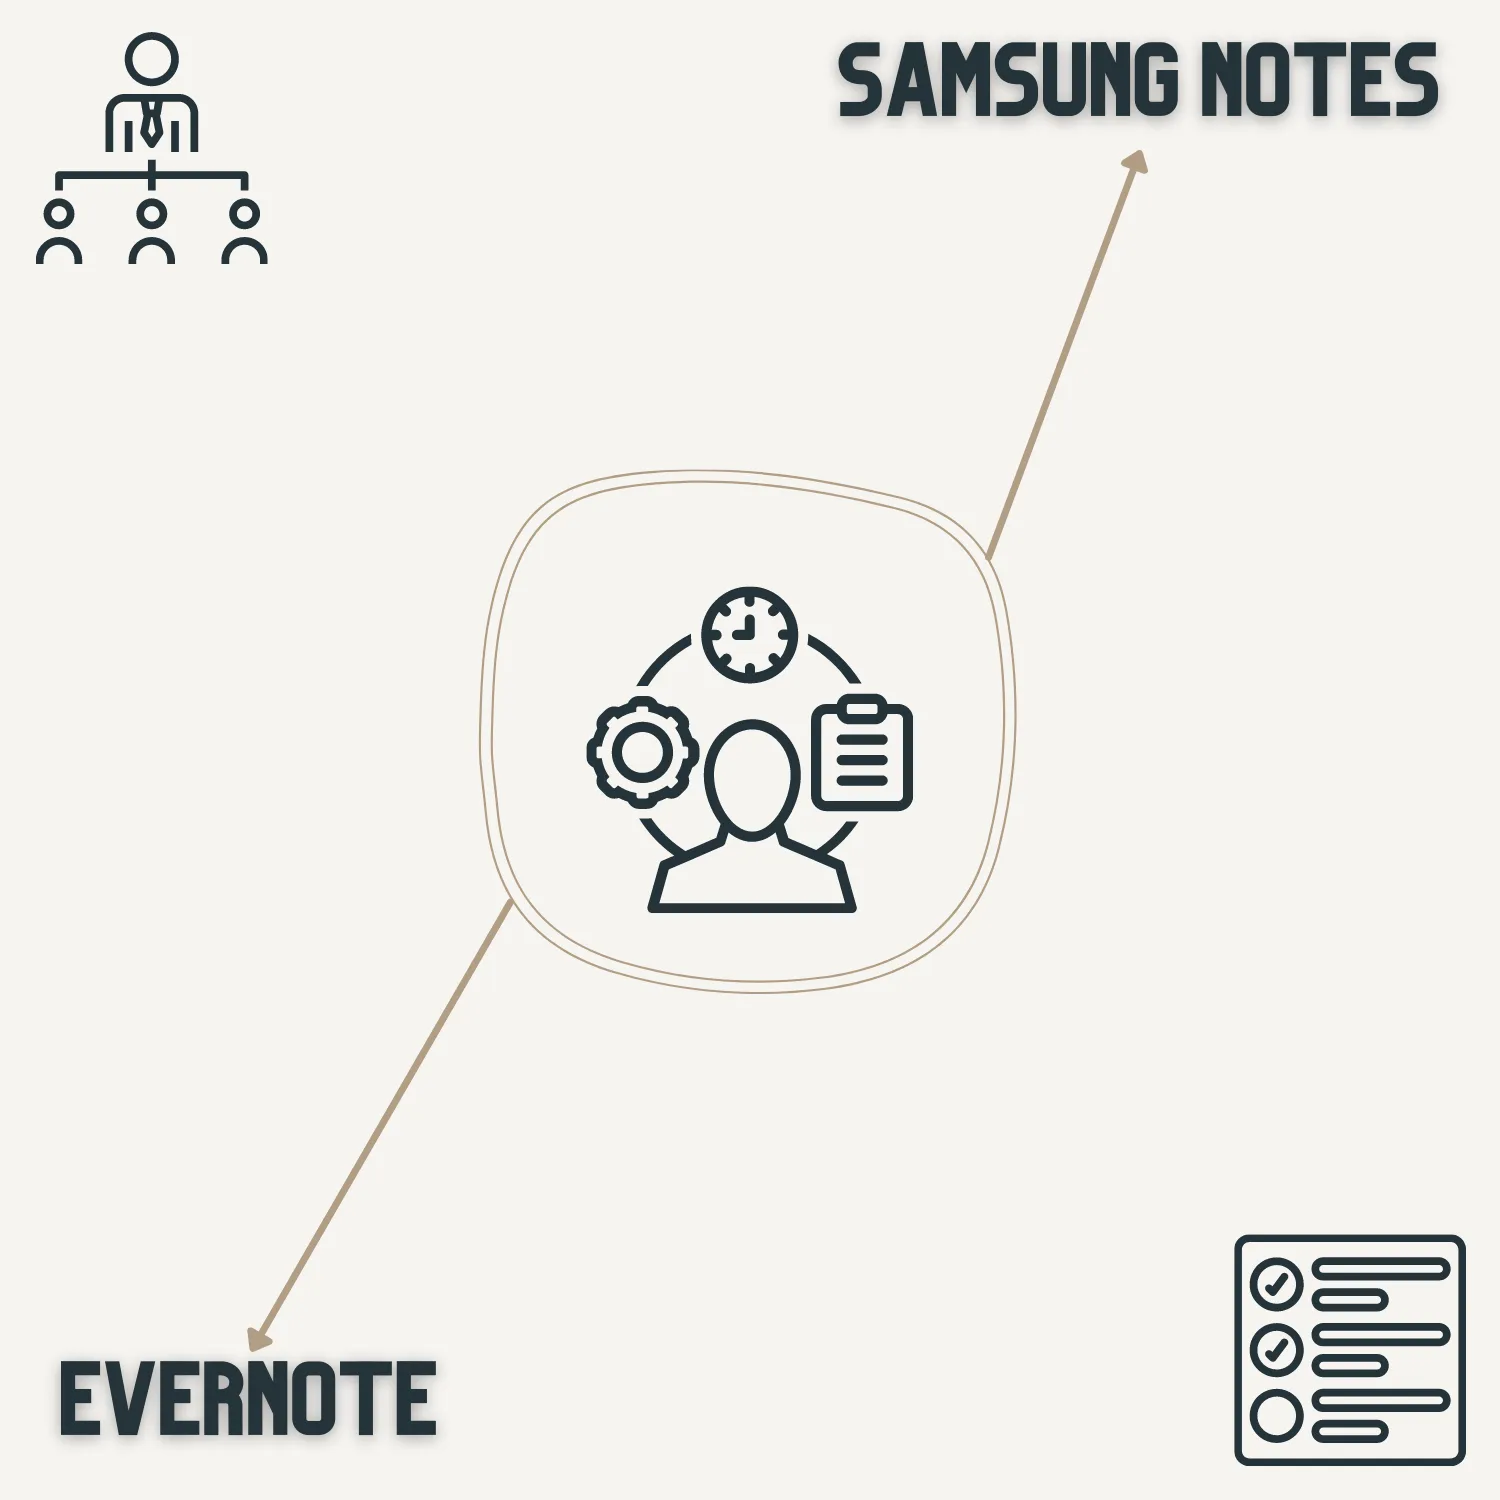 Samsung Notes vs. Evernote